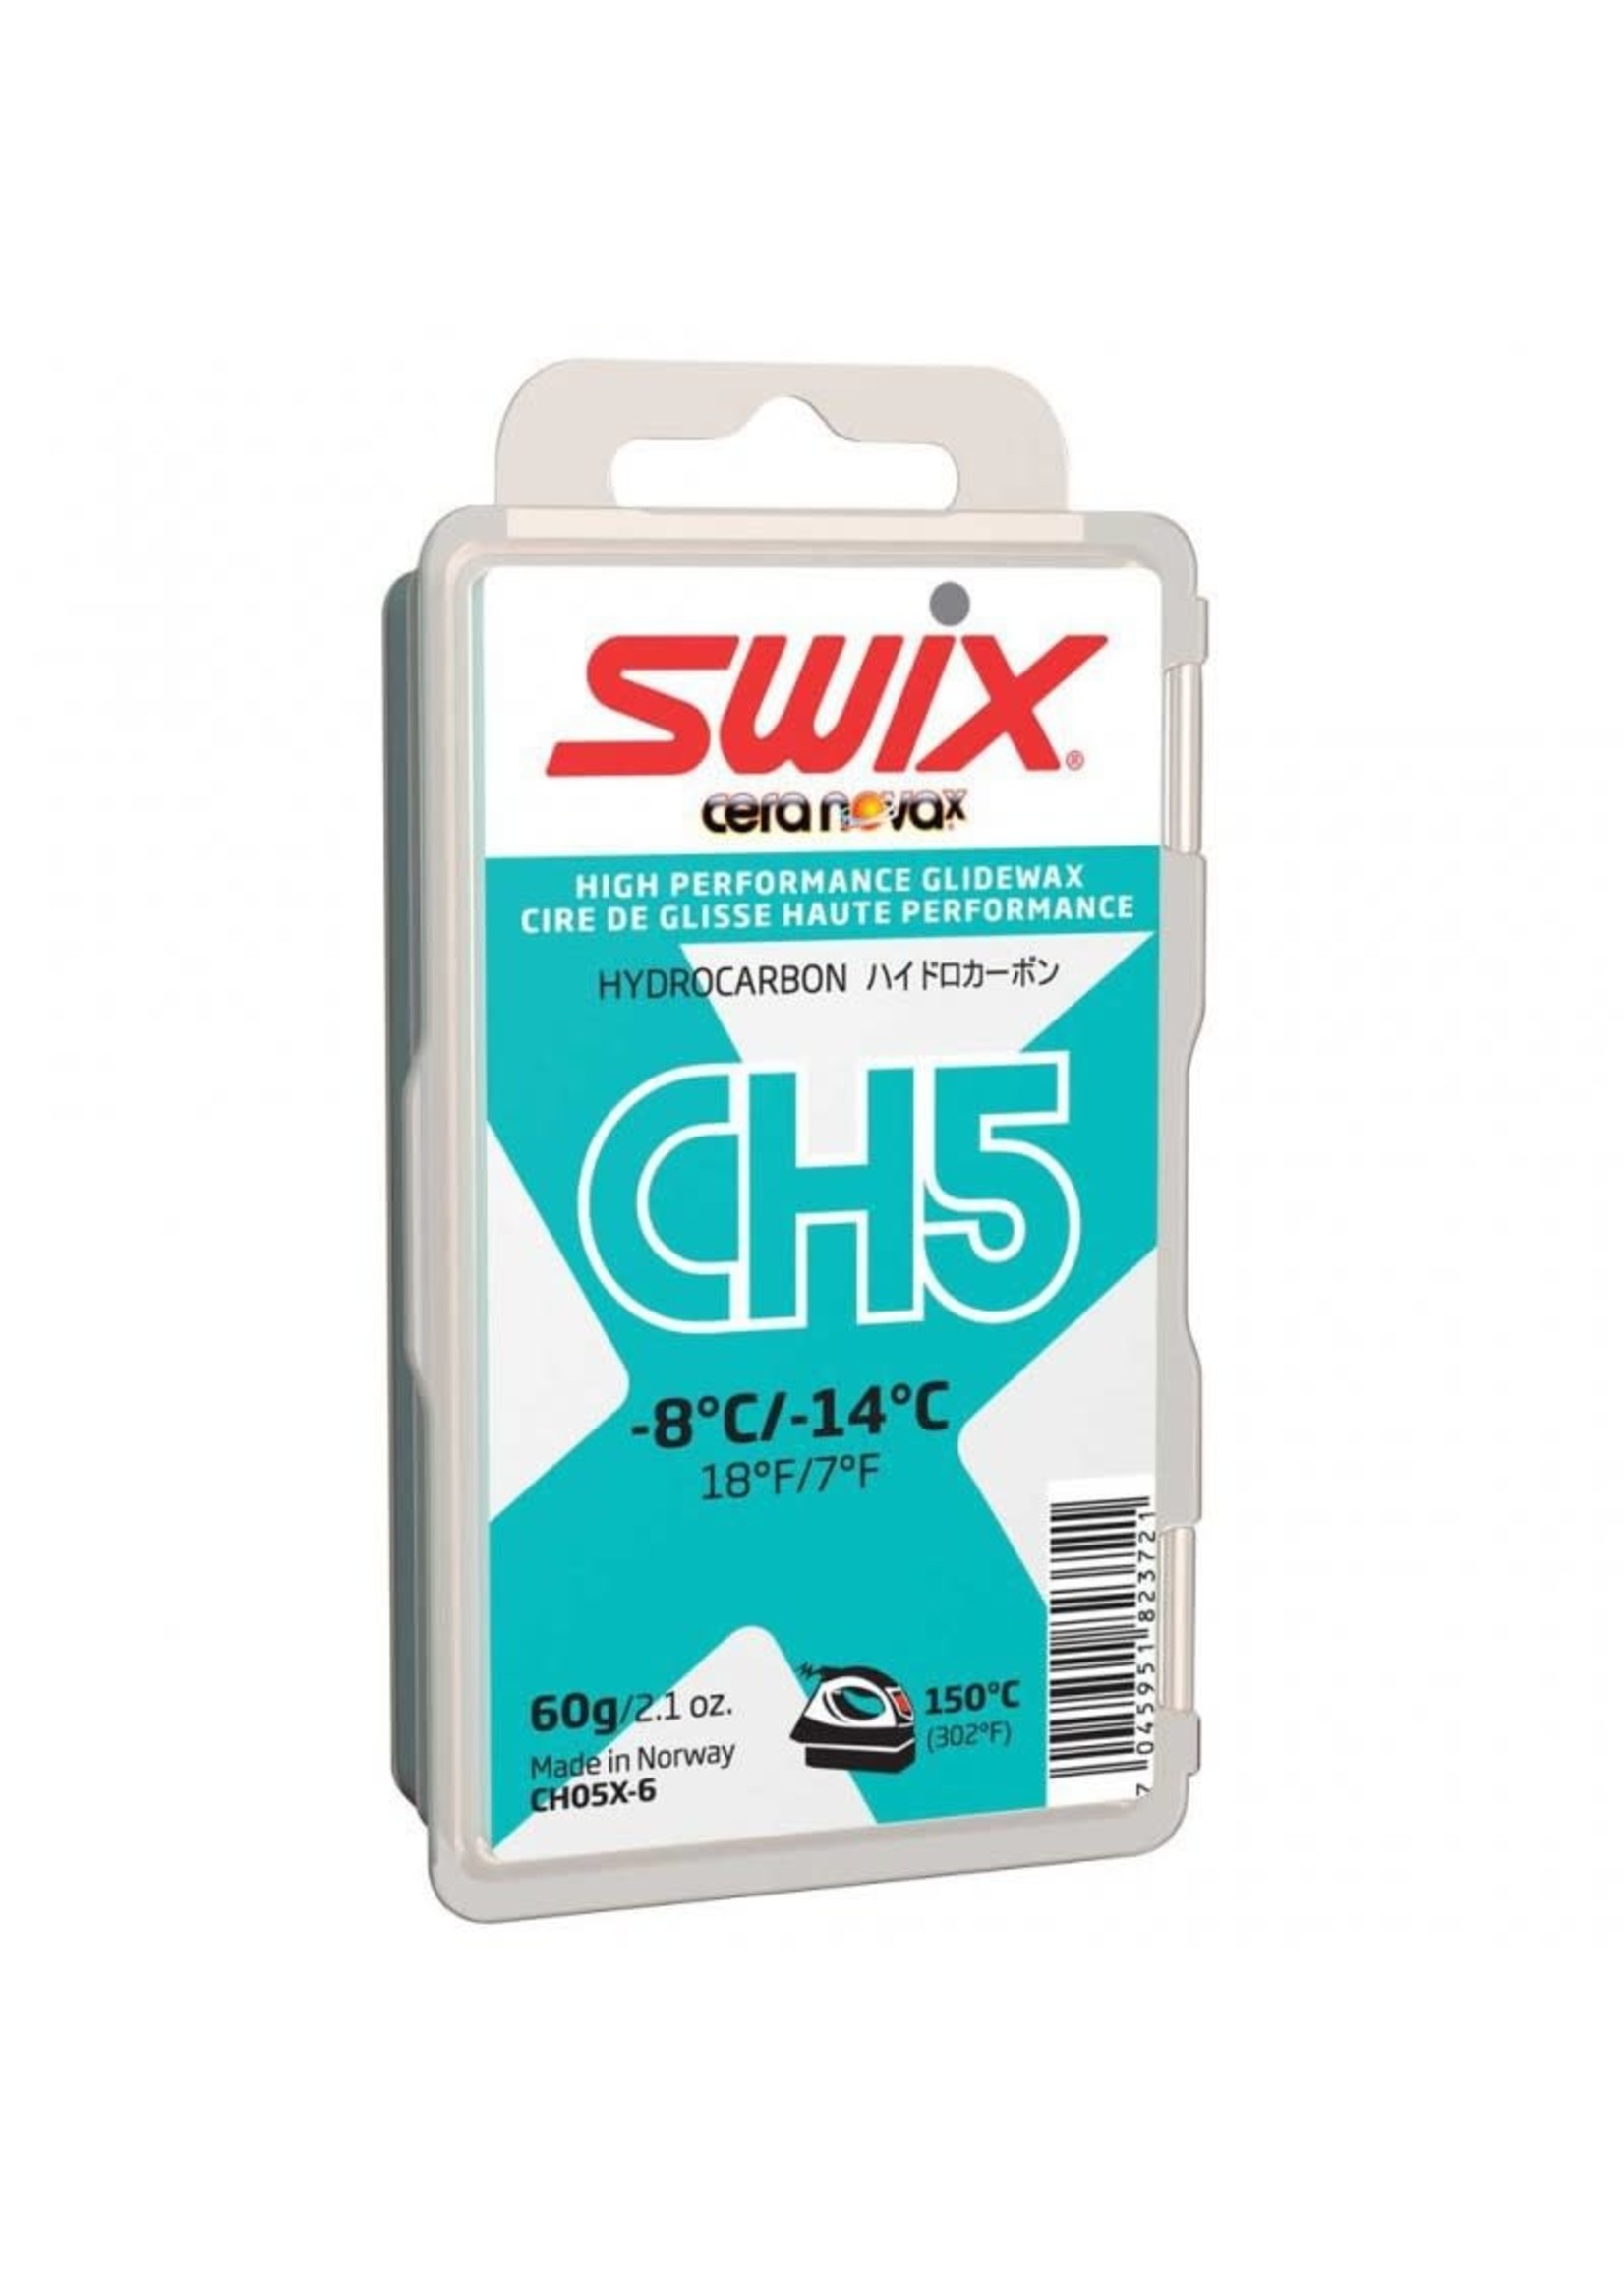 Swix Swix Hydrocarbon High Performance Glide Wax